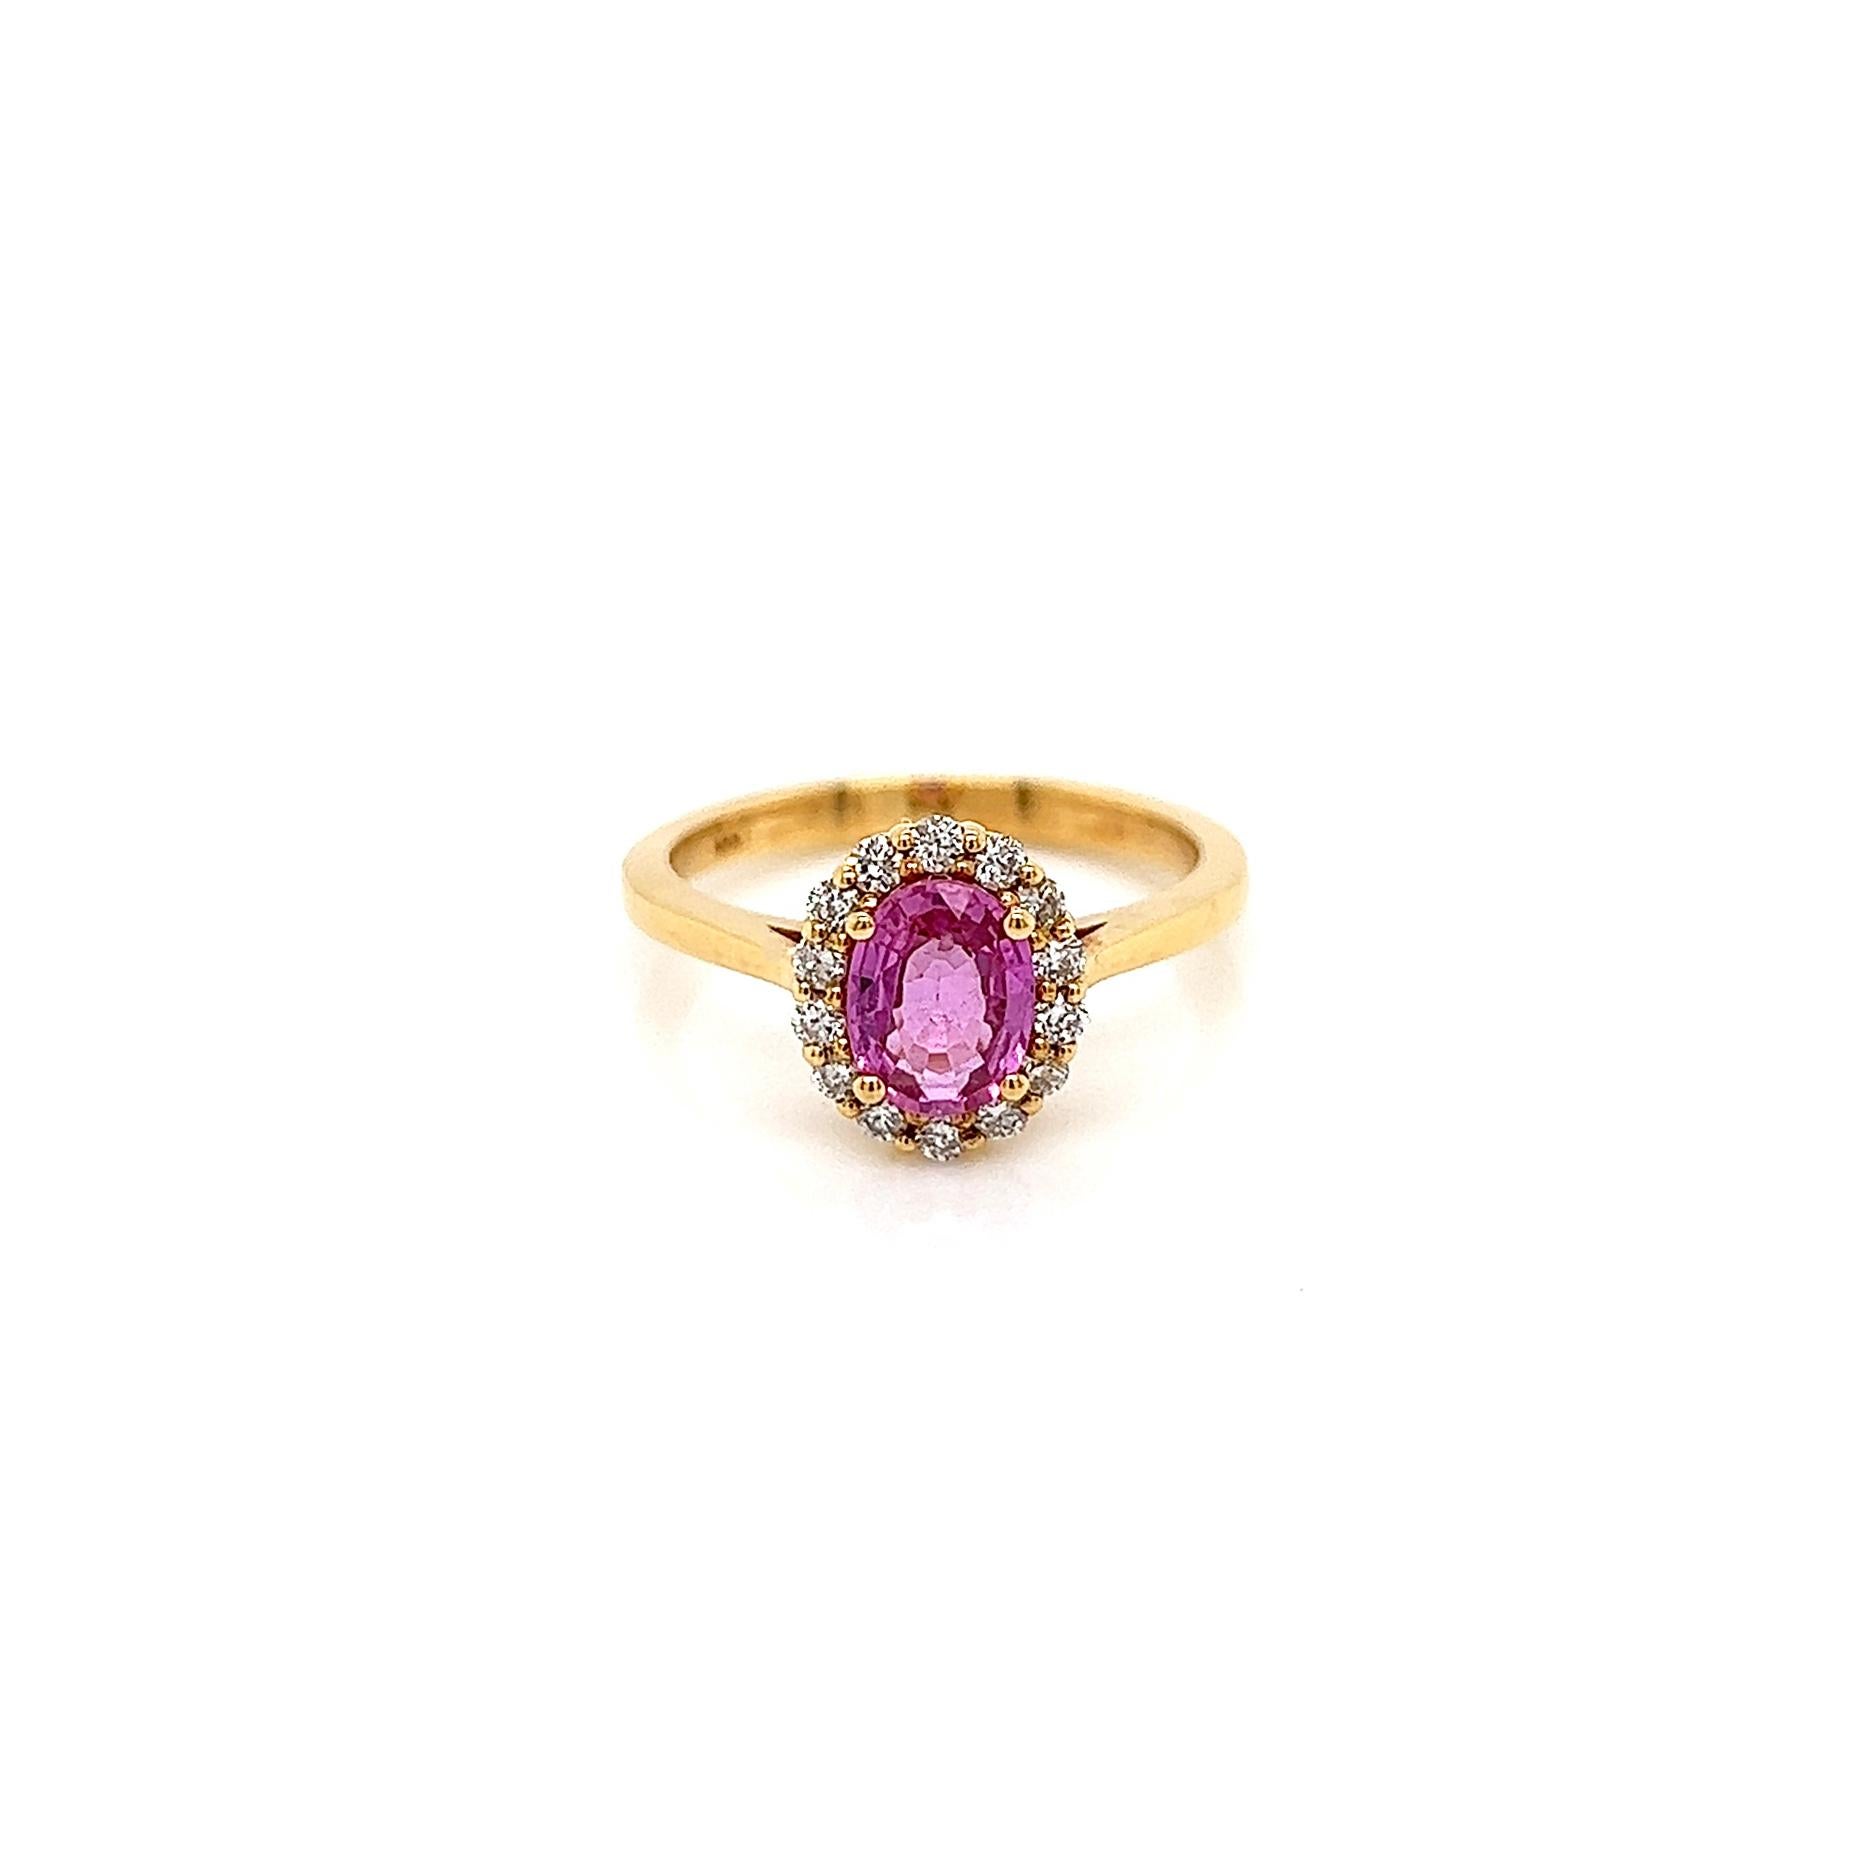 1.33 Total Carat Pink Sapphire Diamond Halo Ladies Ring

-Metal Type: 18K Yellow Gold 
-1.05 Carat Oval Cut Genuine Corundum Pink Sapphire 
-0.28 Carat Round Side Natural Diamonds
-Size 7.0

Made in New York City.